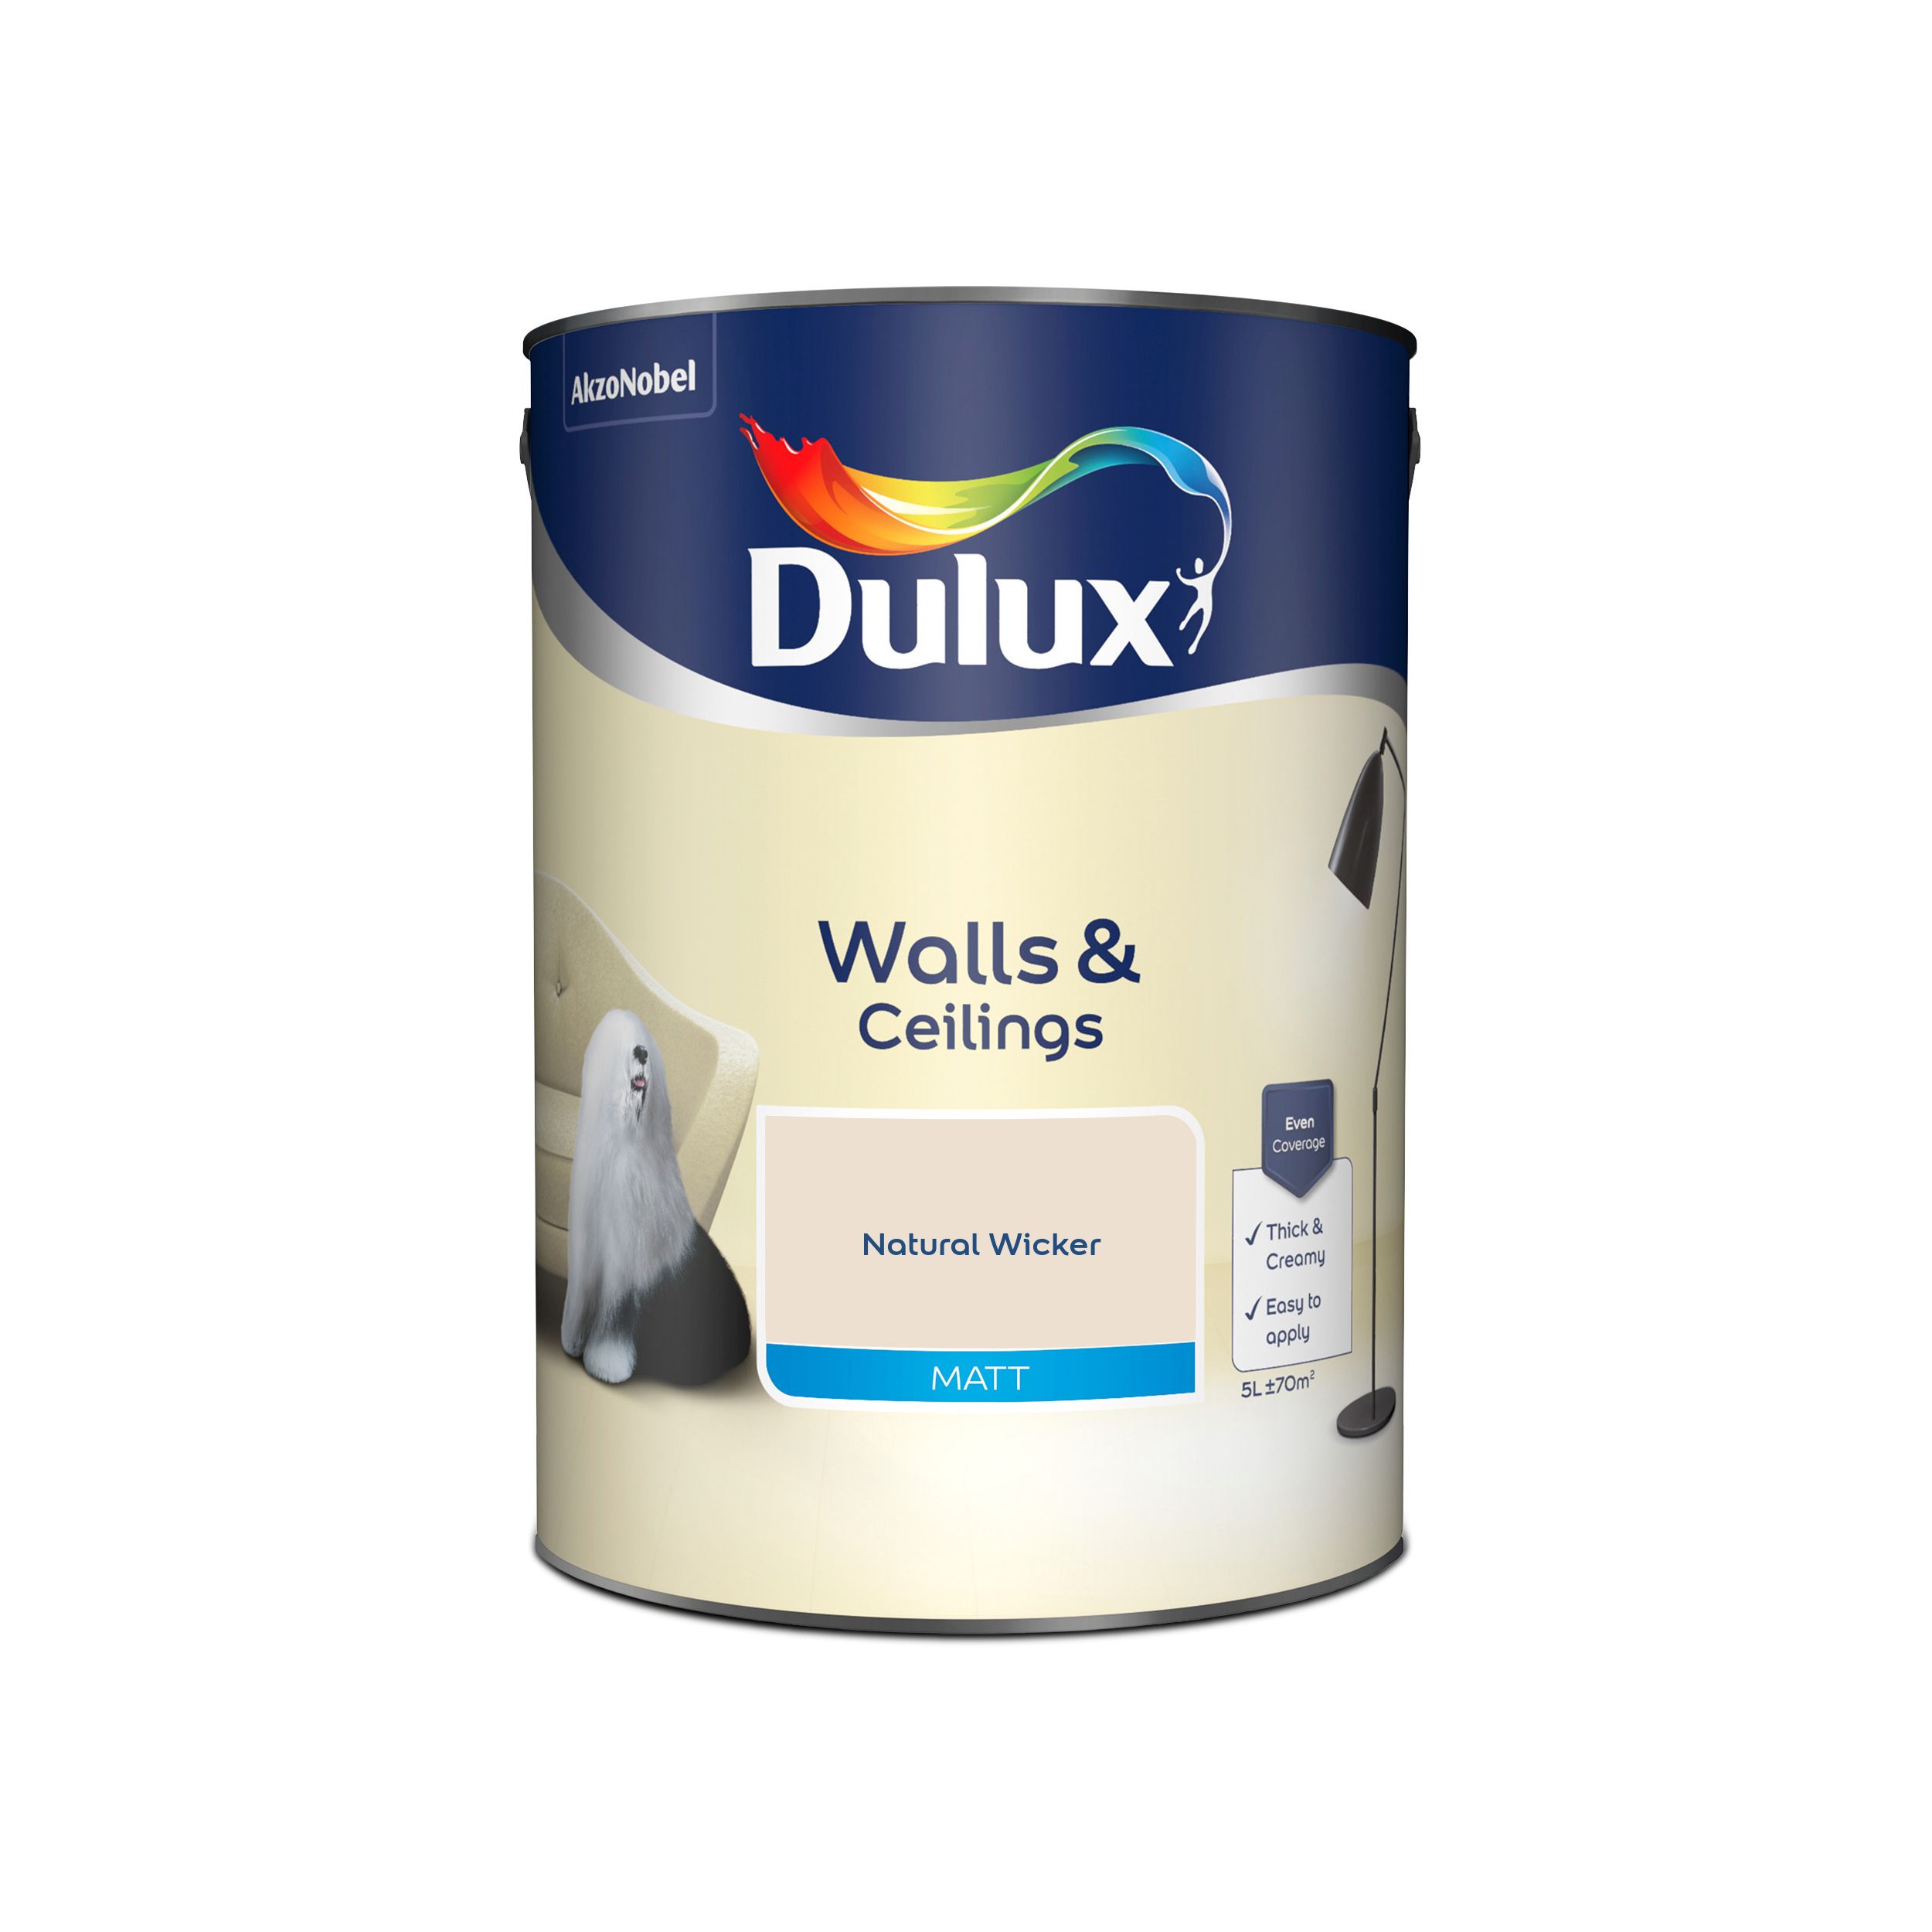 Dulux Walls & ceilings Natural wicker Matt Emulsion paint, 5L